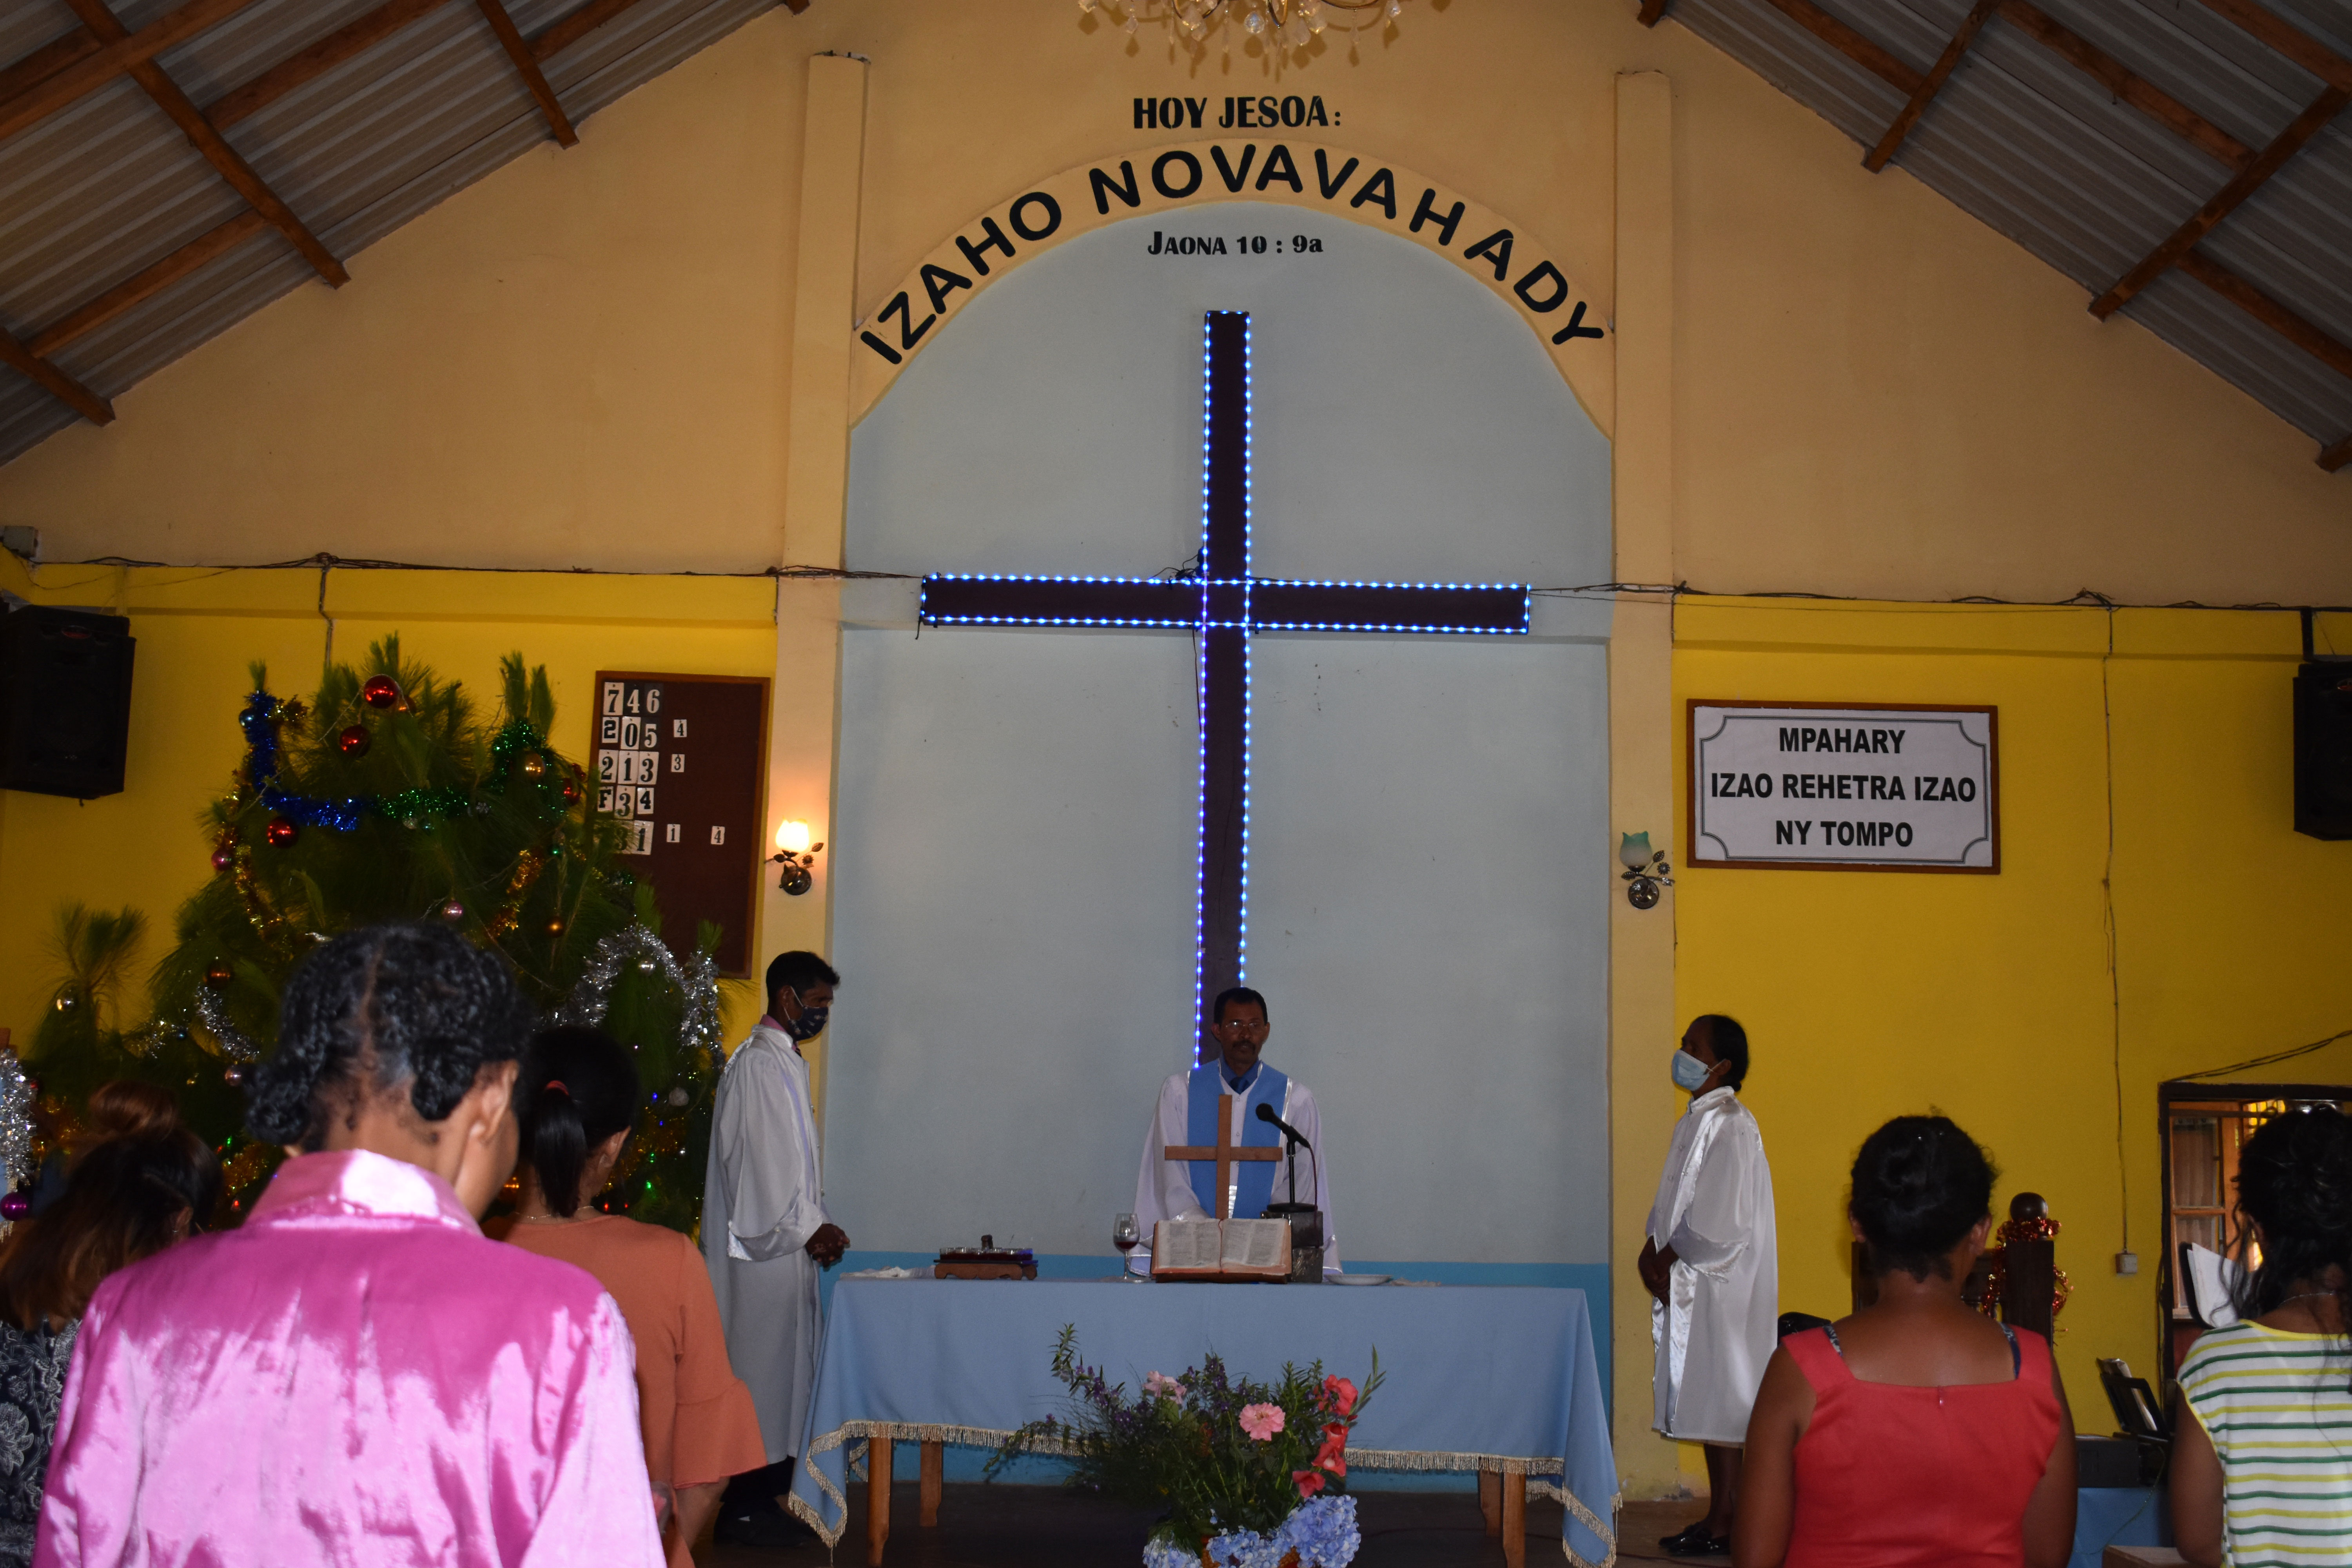 FJKM Church at Ranomafana on Jan. 1, 2023